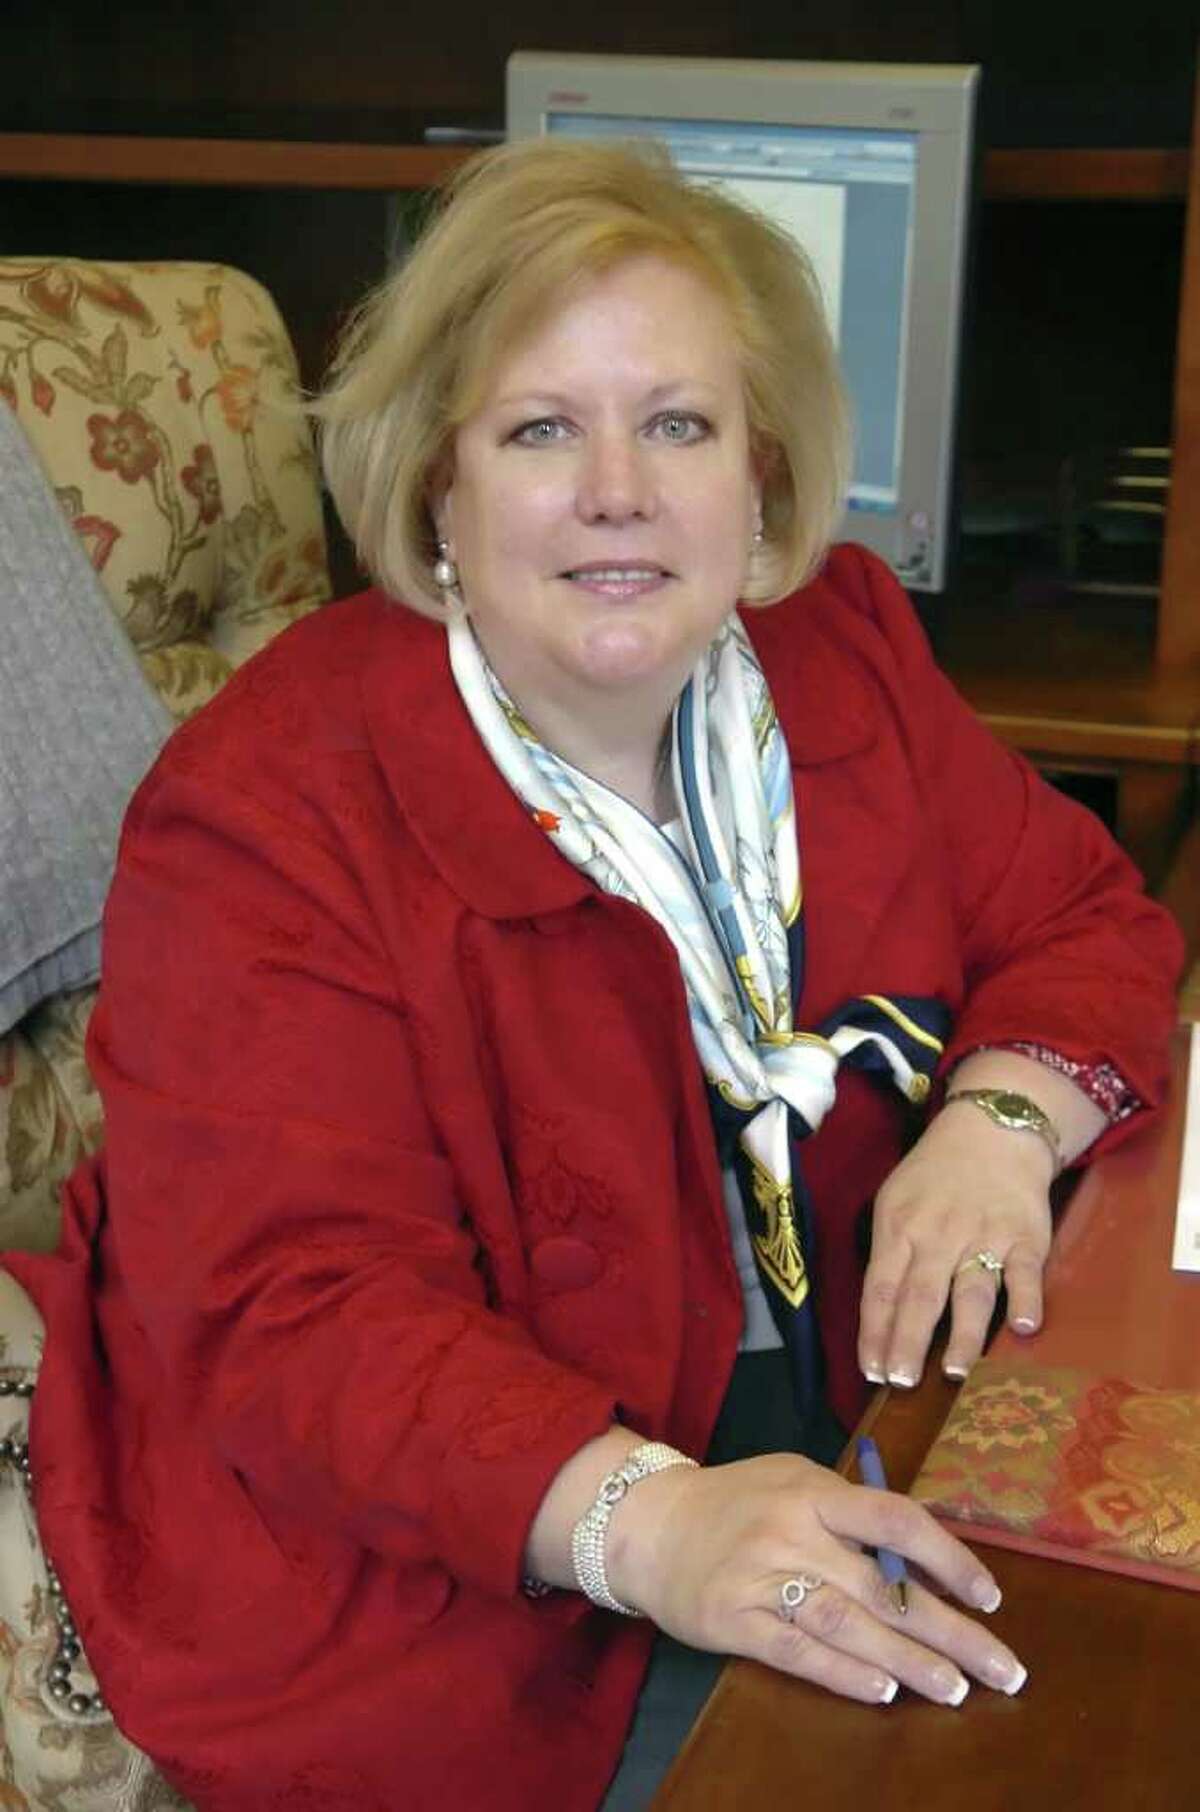 Deputy Superintendent of Schools Ellen Flanagan made $196,878.70 in 2011.